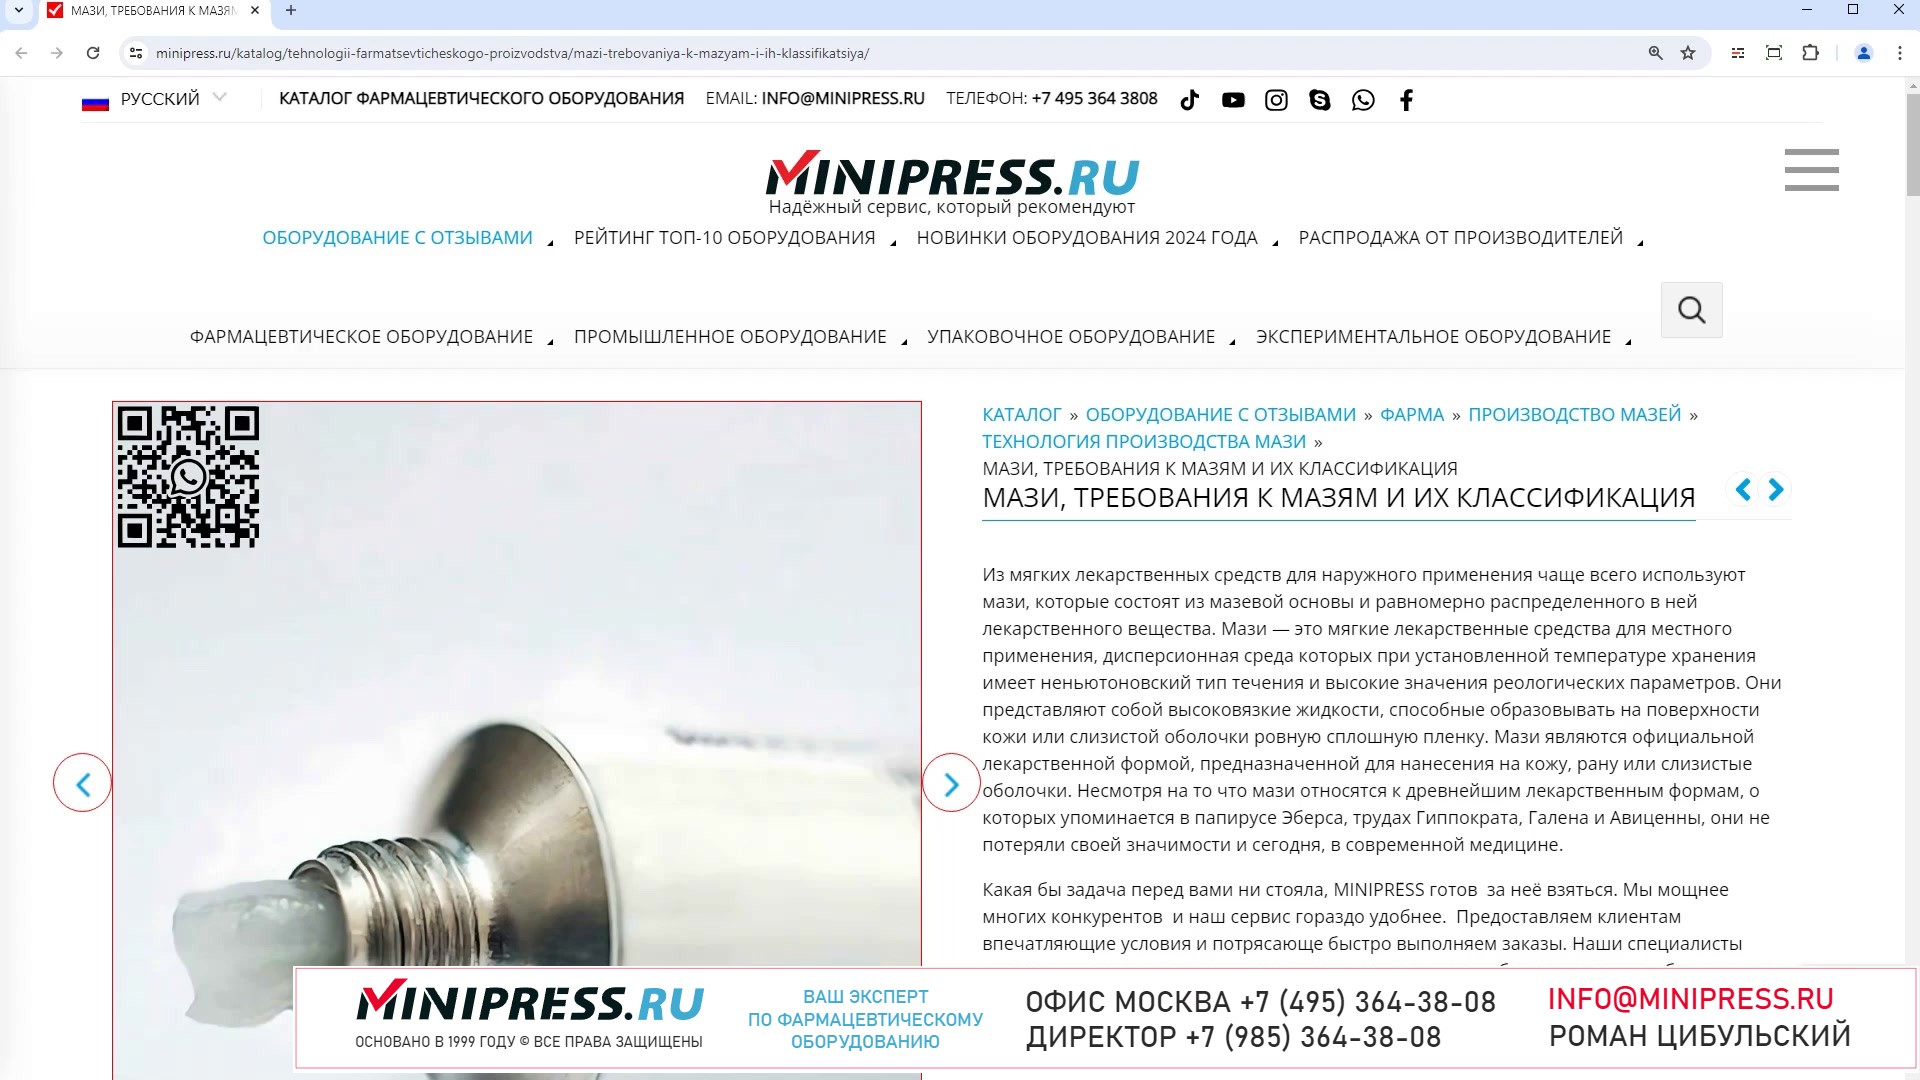 Minipress.ru Мази, требования к мазям и их классификация